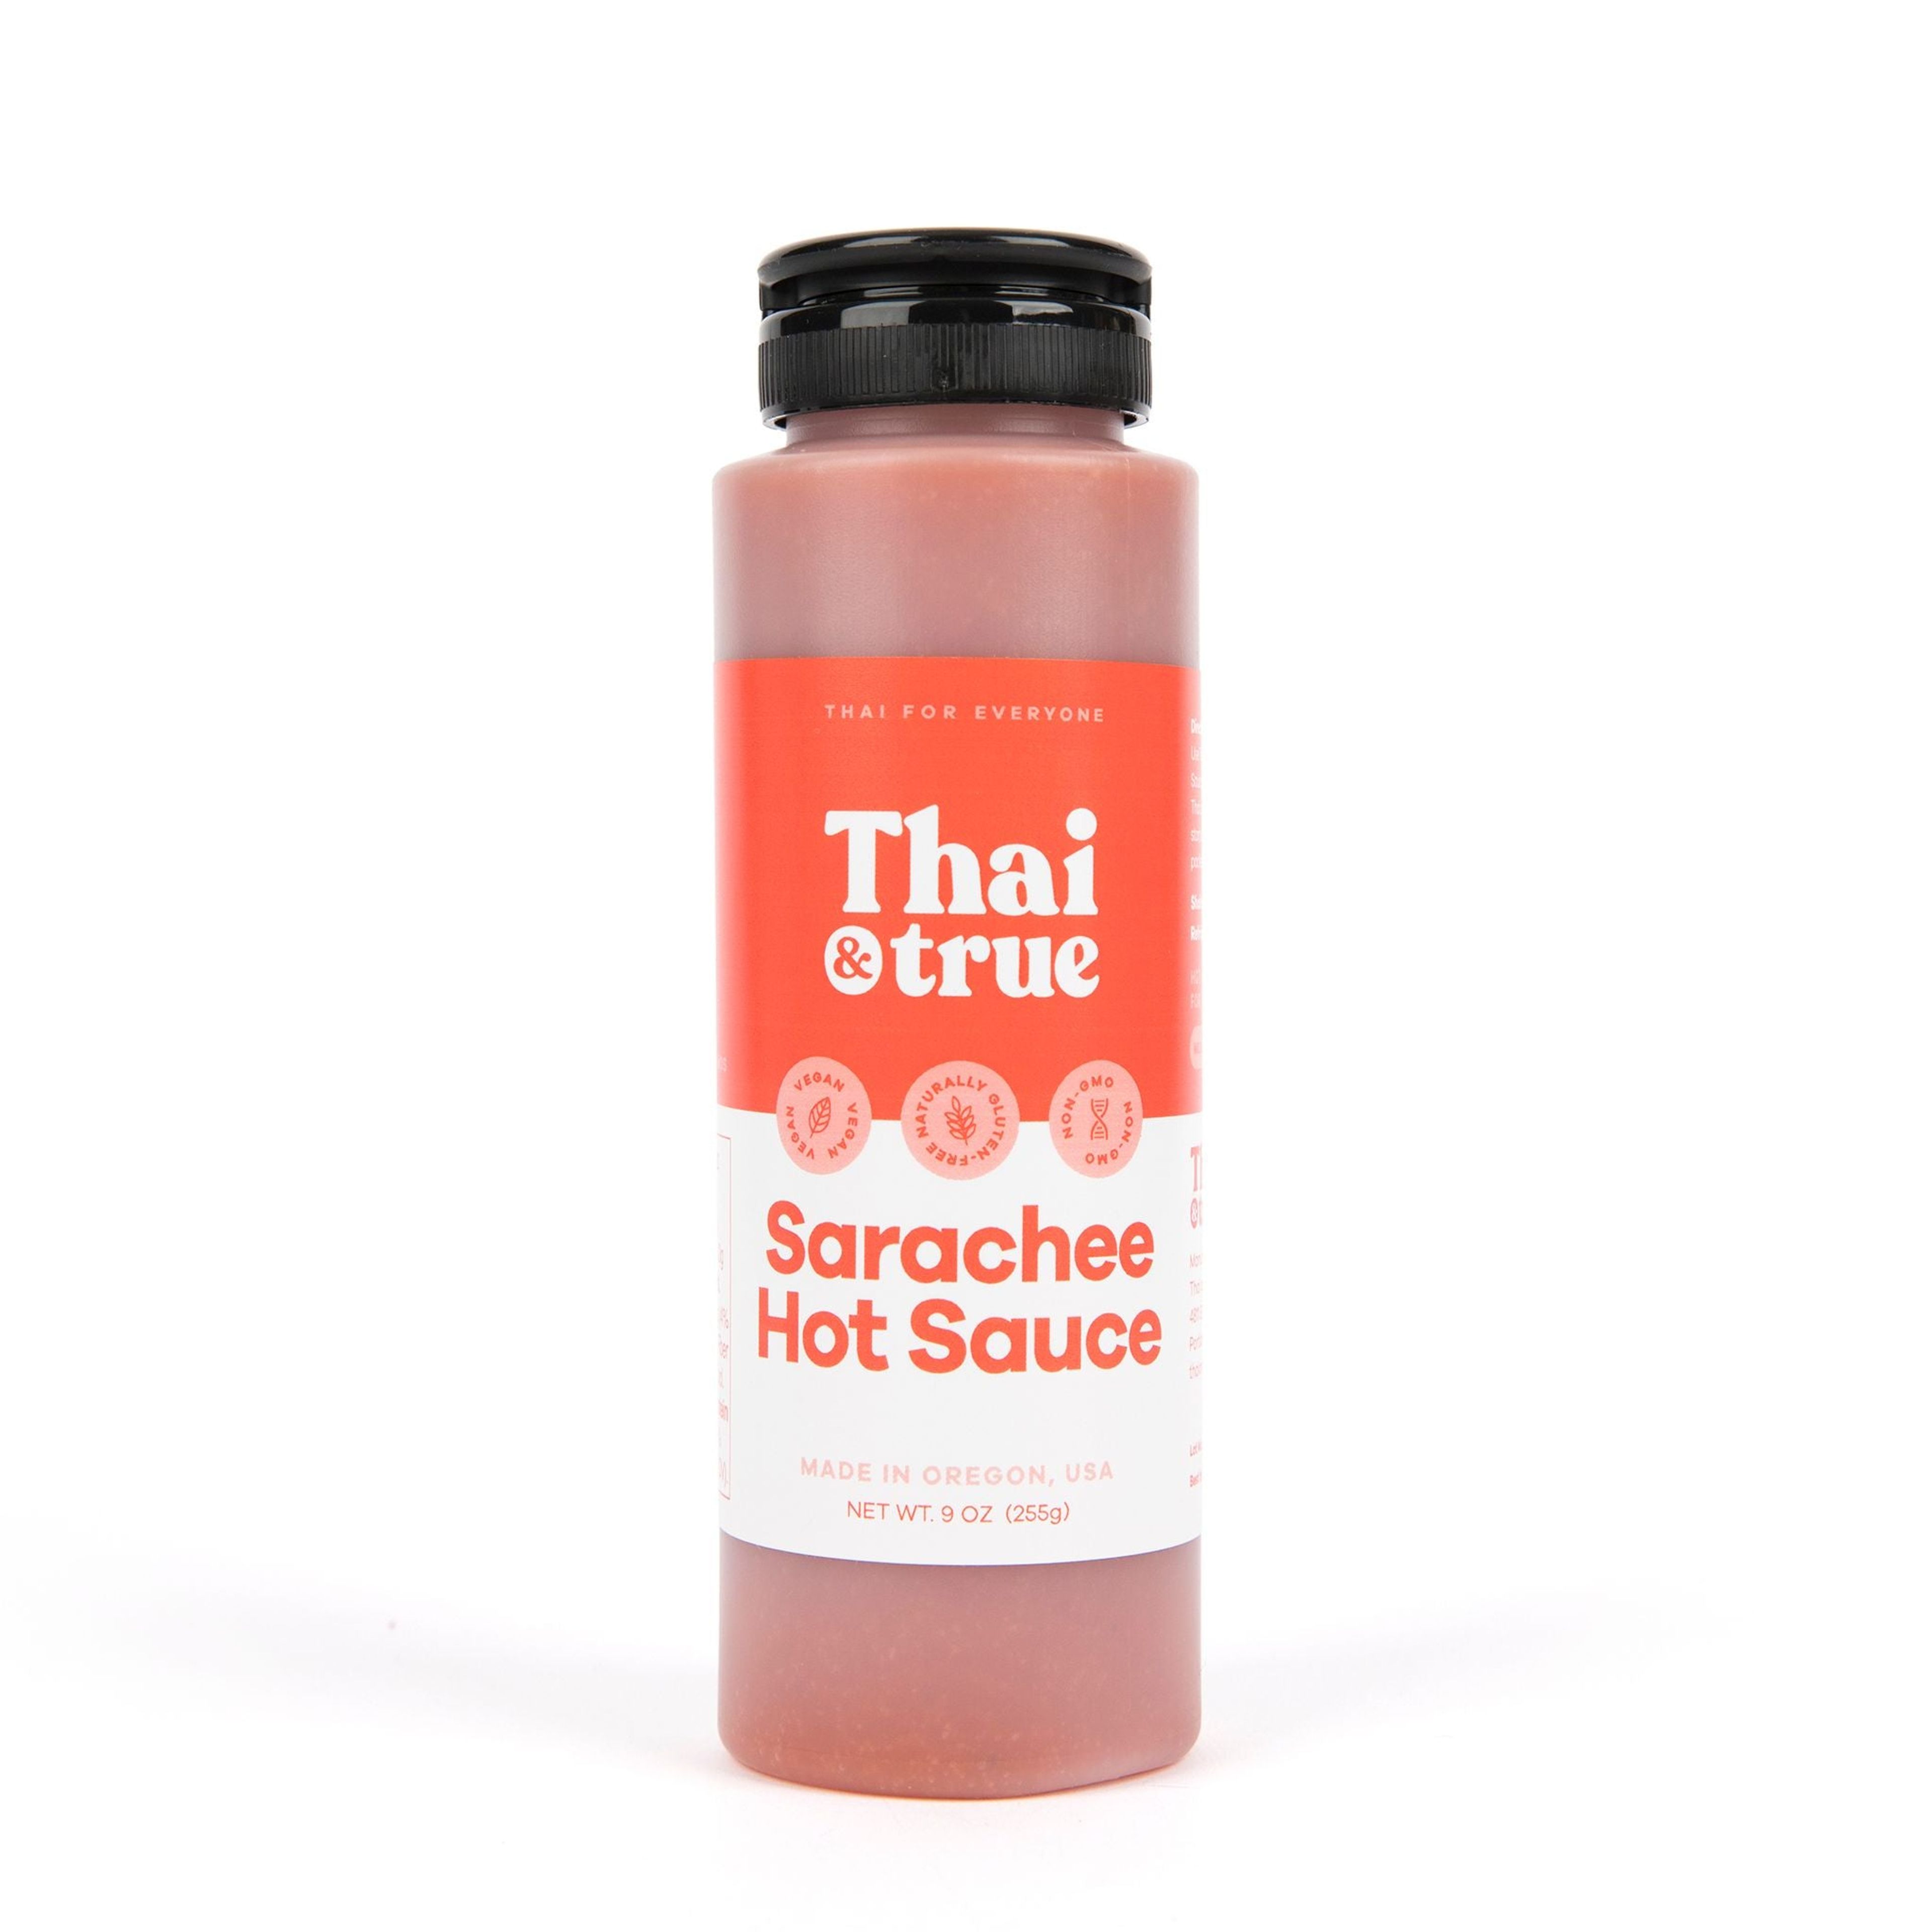 Sarachee Hot Sauce